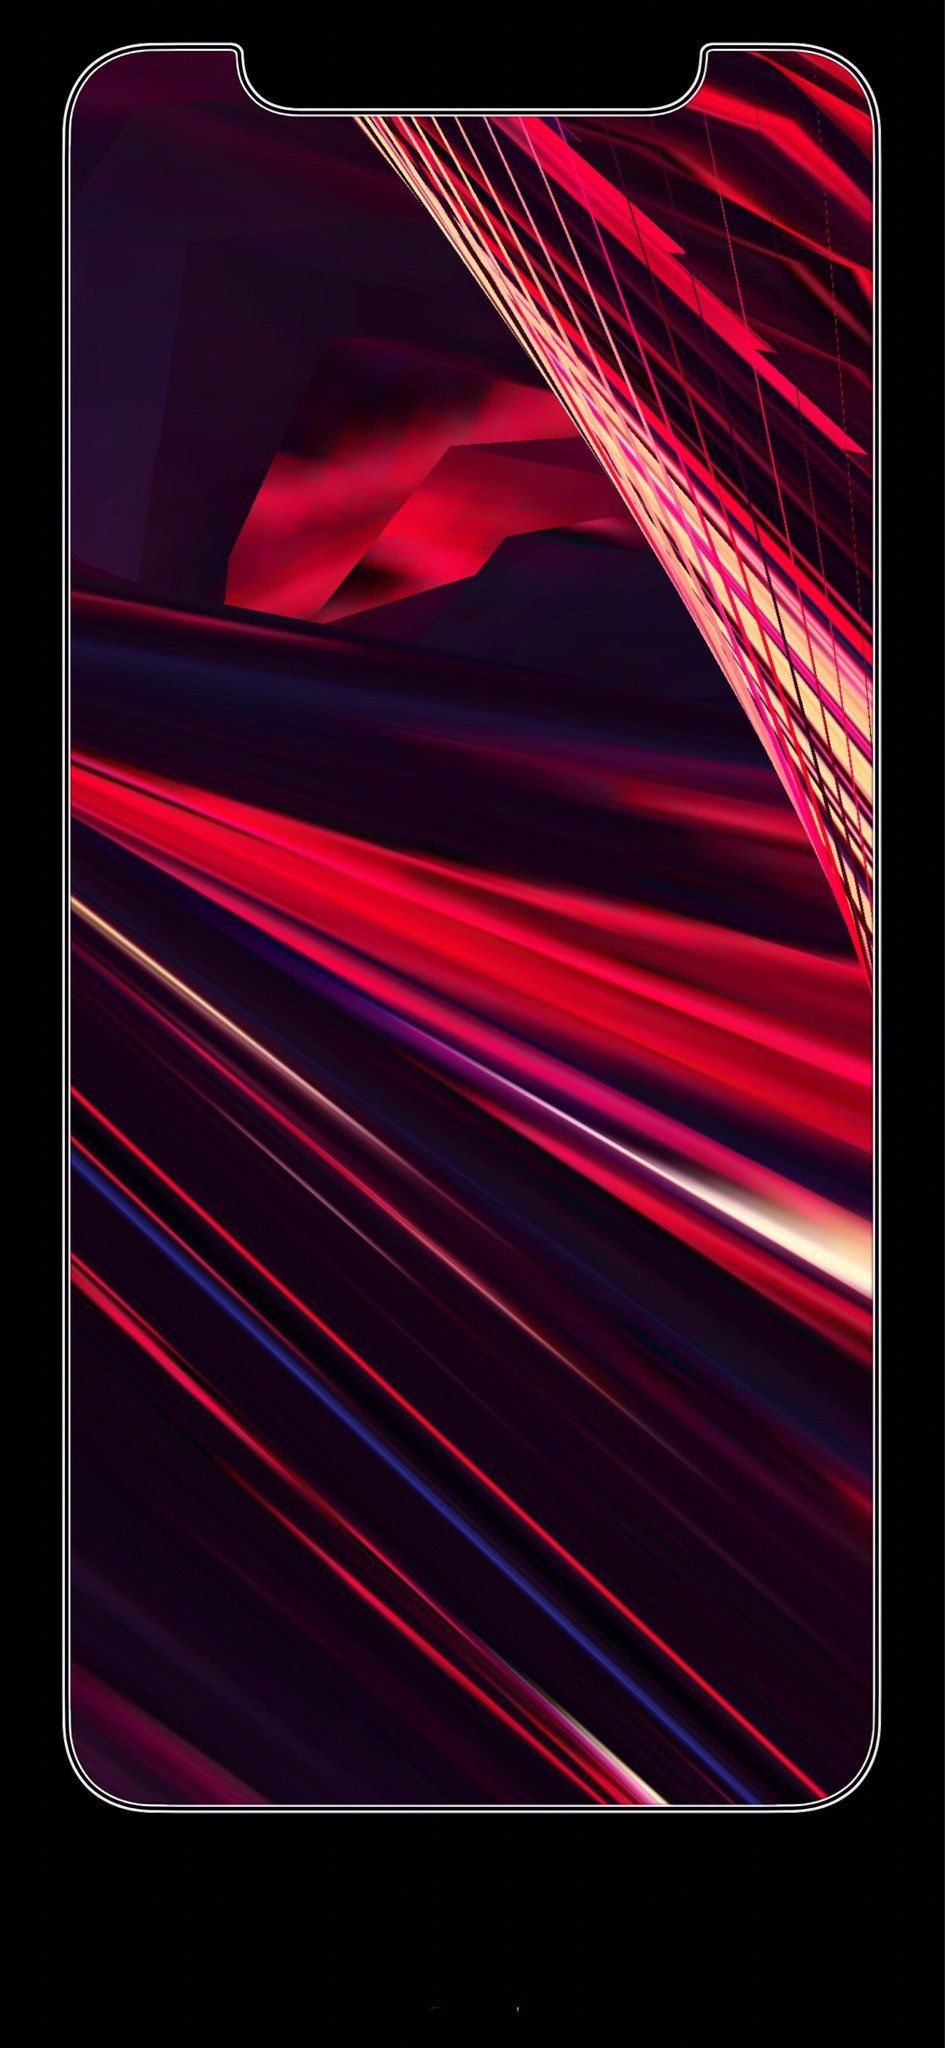 Iphone X Black Wallpaper With Border - Iphone Wallpaper UHD 4K